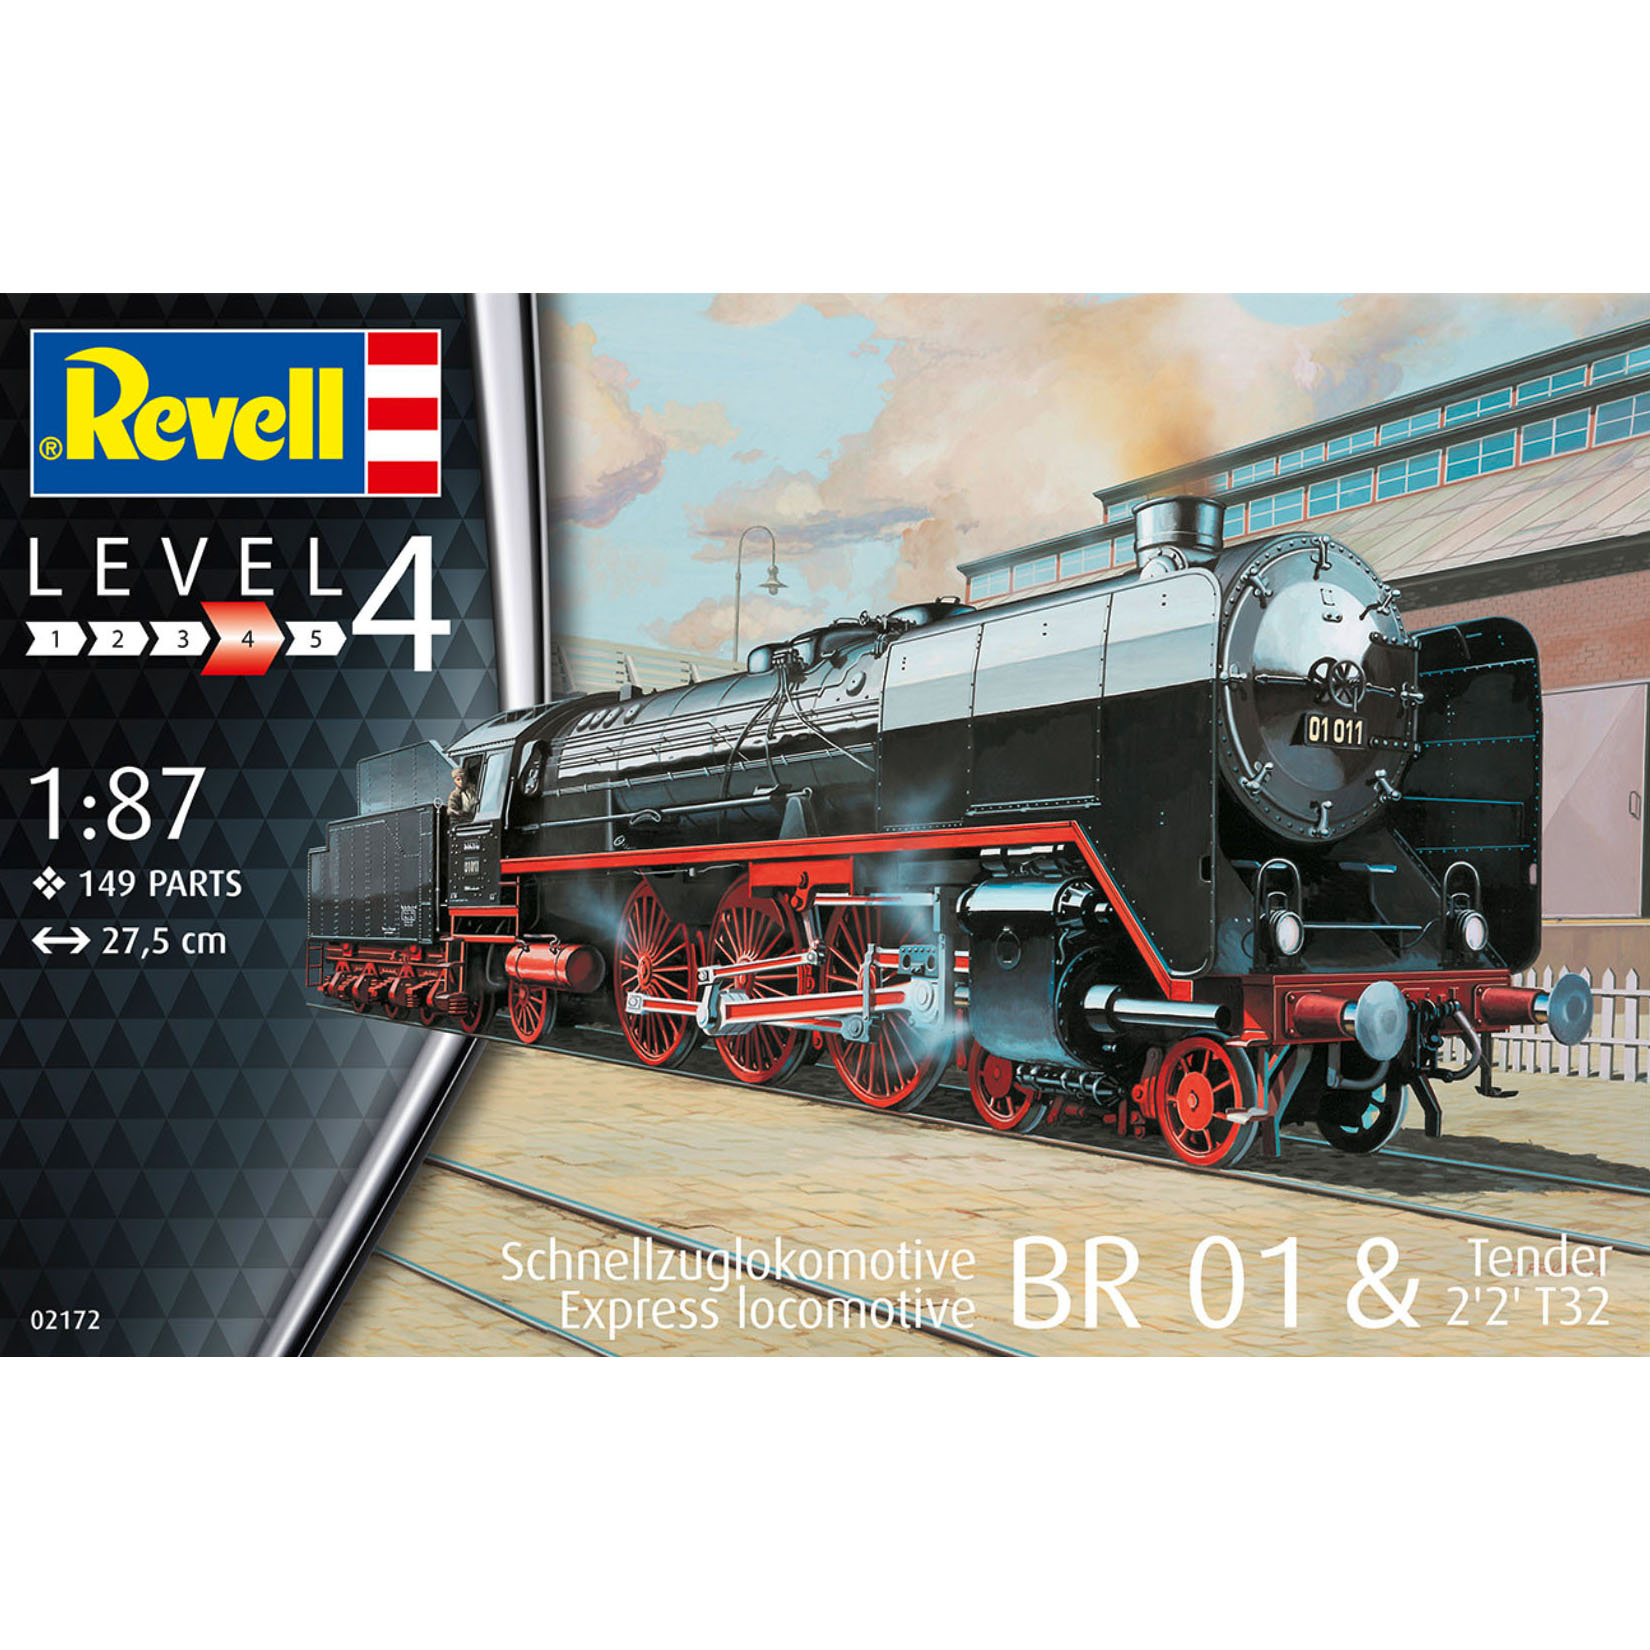 02172 Revell 1/87 Express Locomotive BR01 & Tender 2 '2' T32